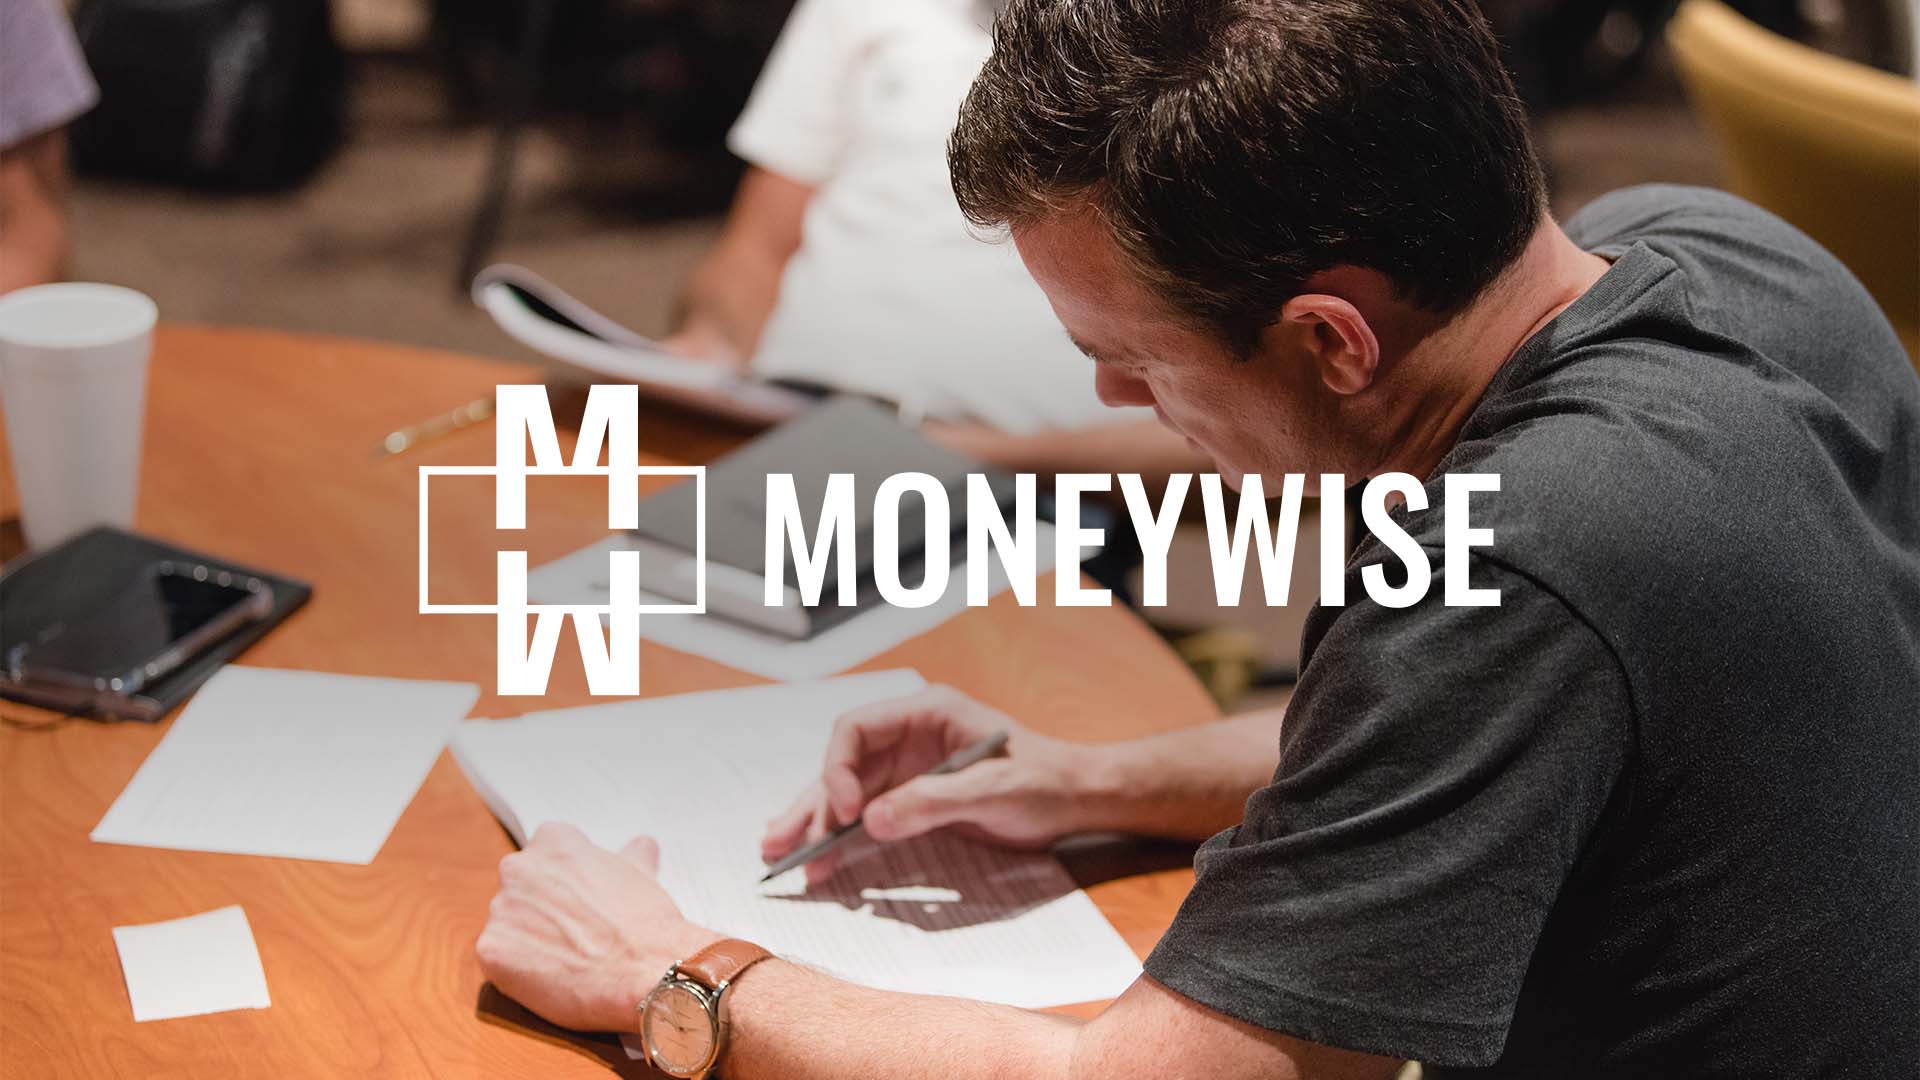 Moneywise